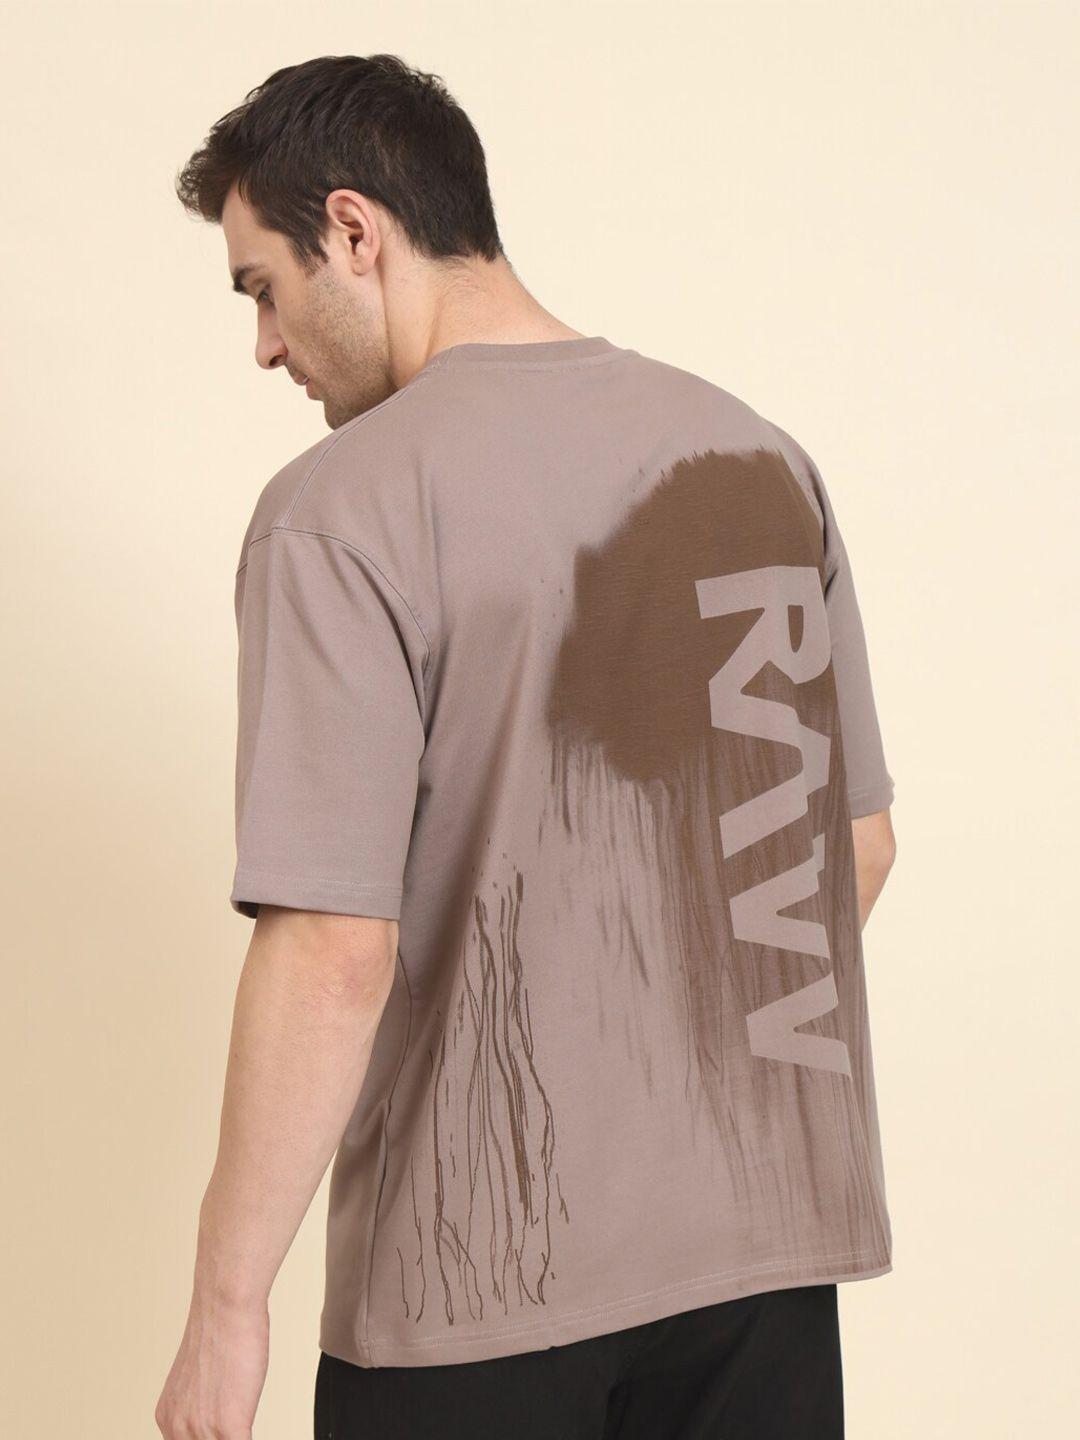 muwin men typography bio finish pockets t-shirt